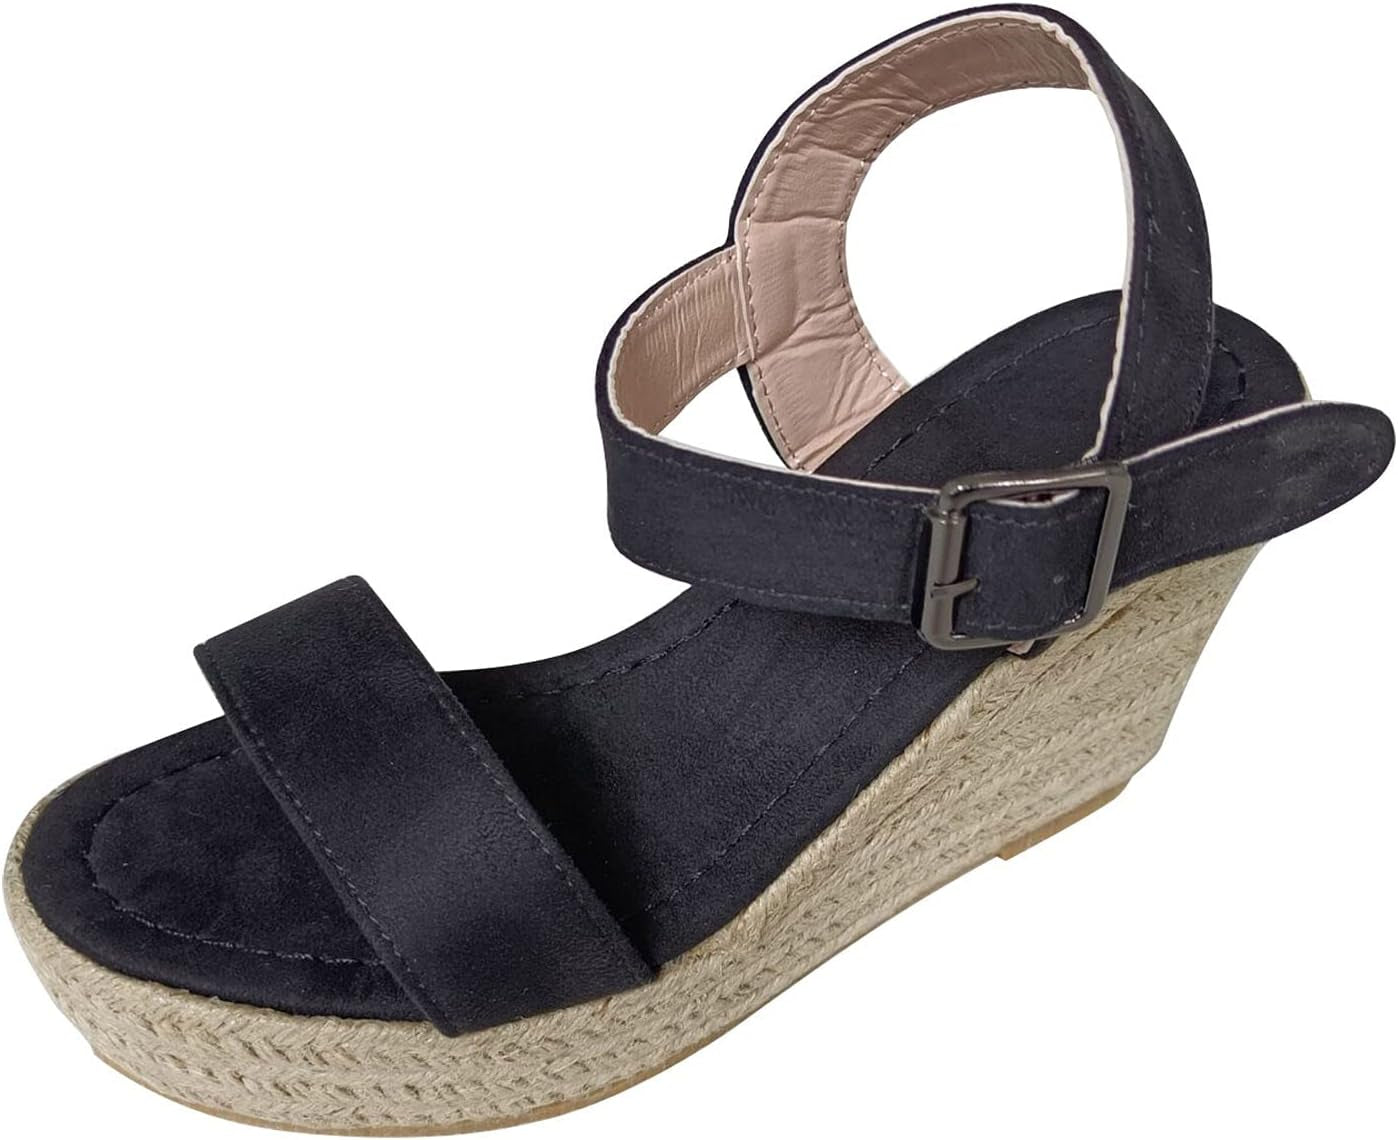 Slip on Wedge Platform Sandals Casual Summer Beach Sandals Shoes Wedge Sandals for Women